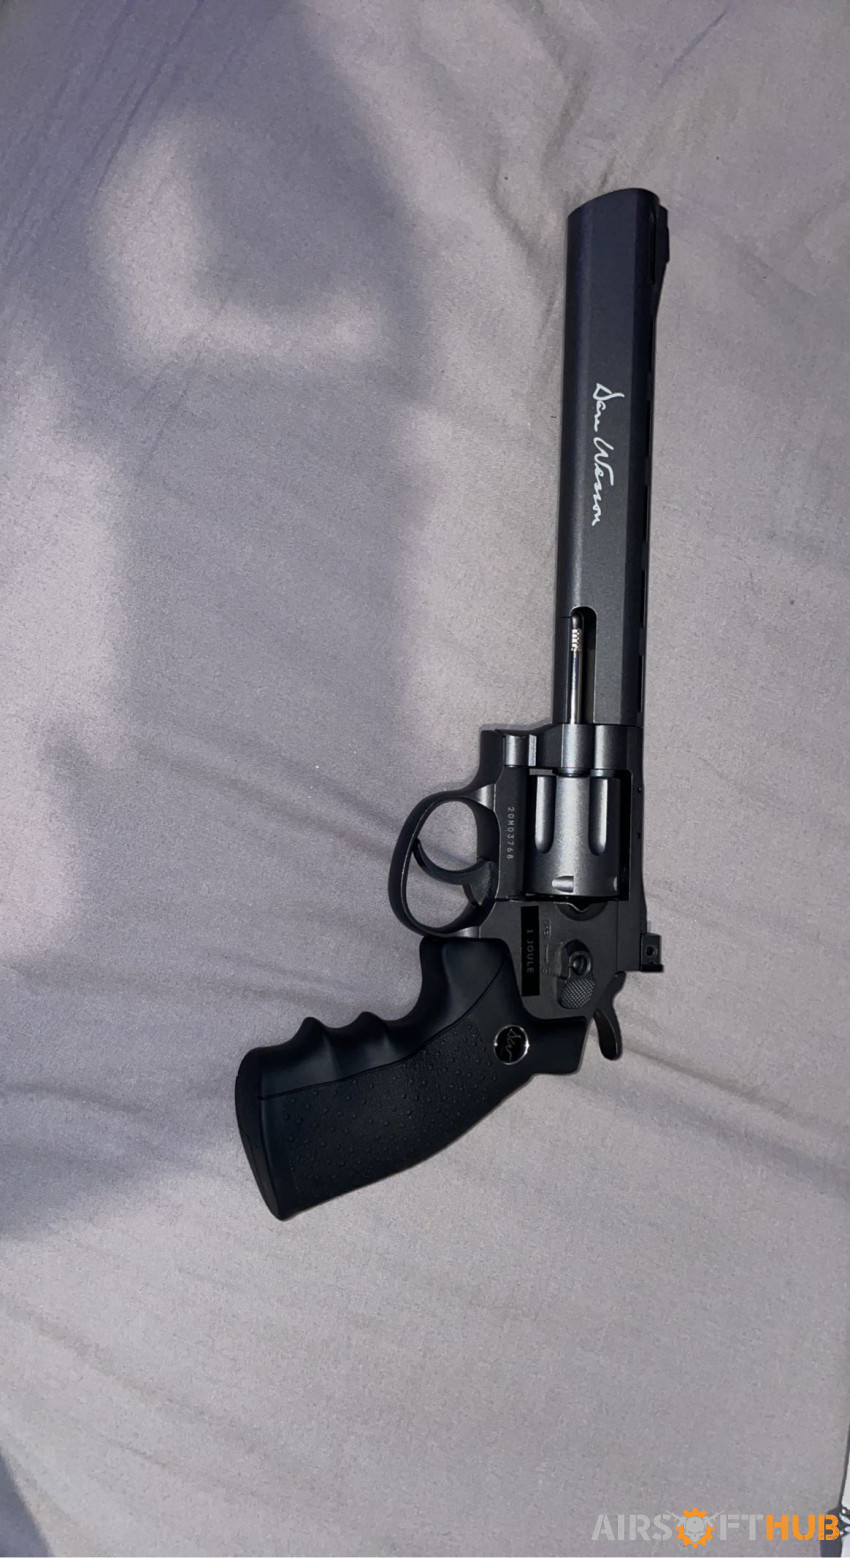 Dan Wesson Revolver - Used airsoft equipment